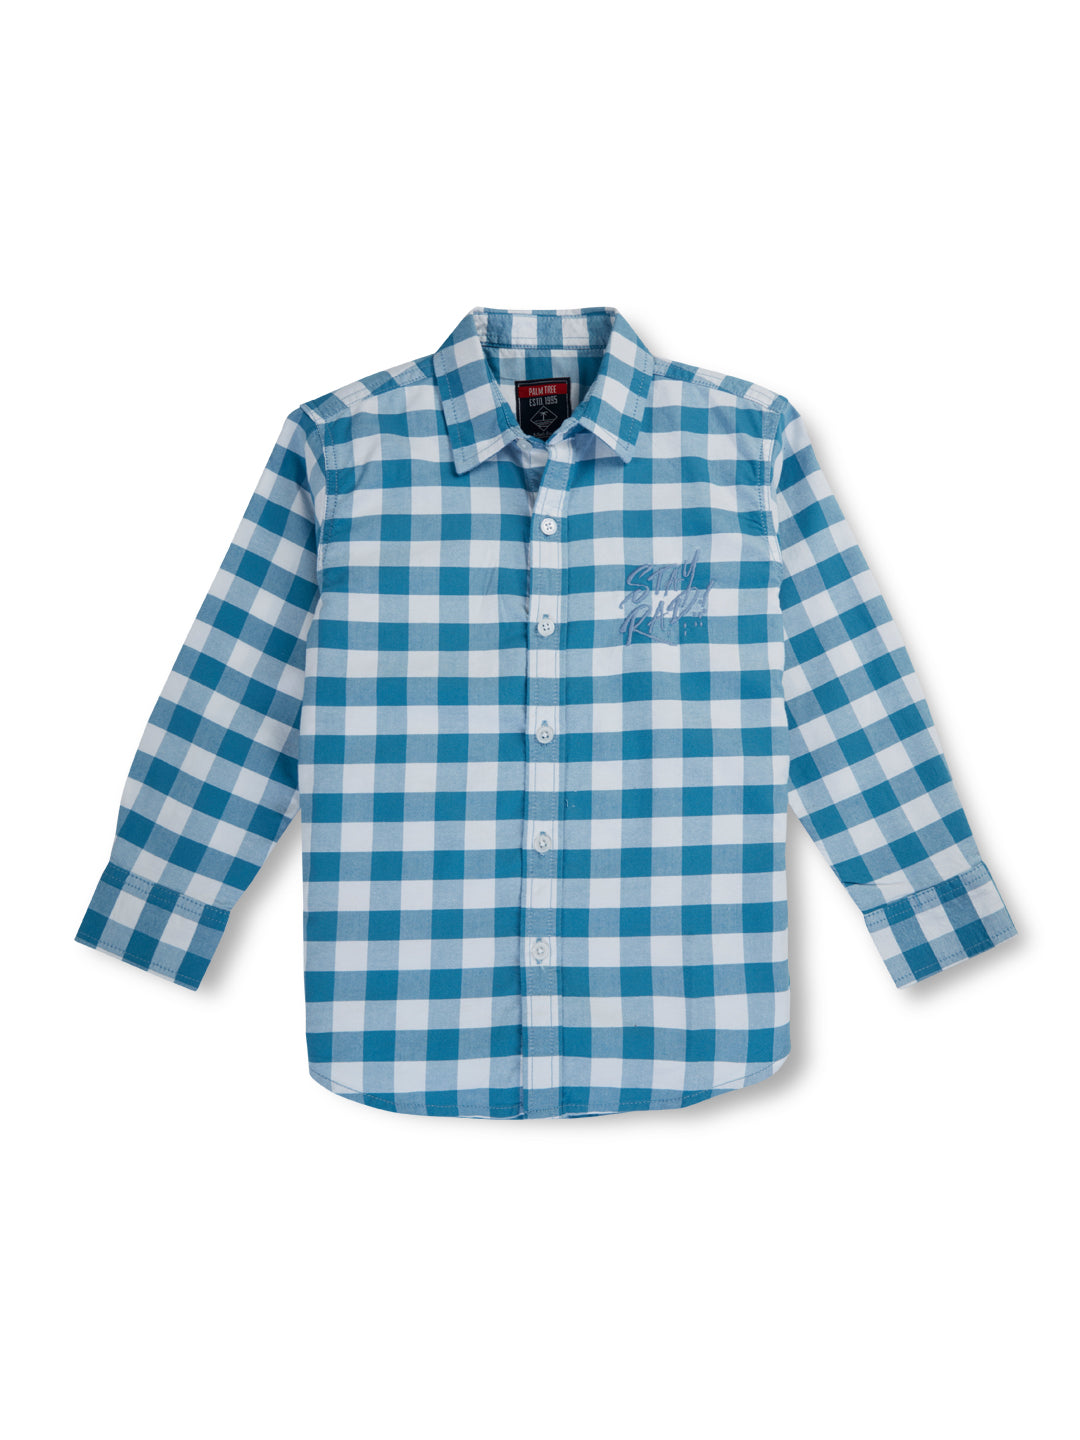 Boys Blue Checks Cotton Shirt Full Sleeves